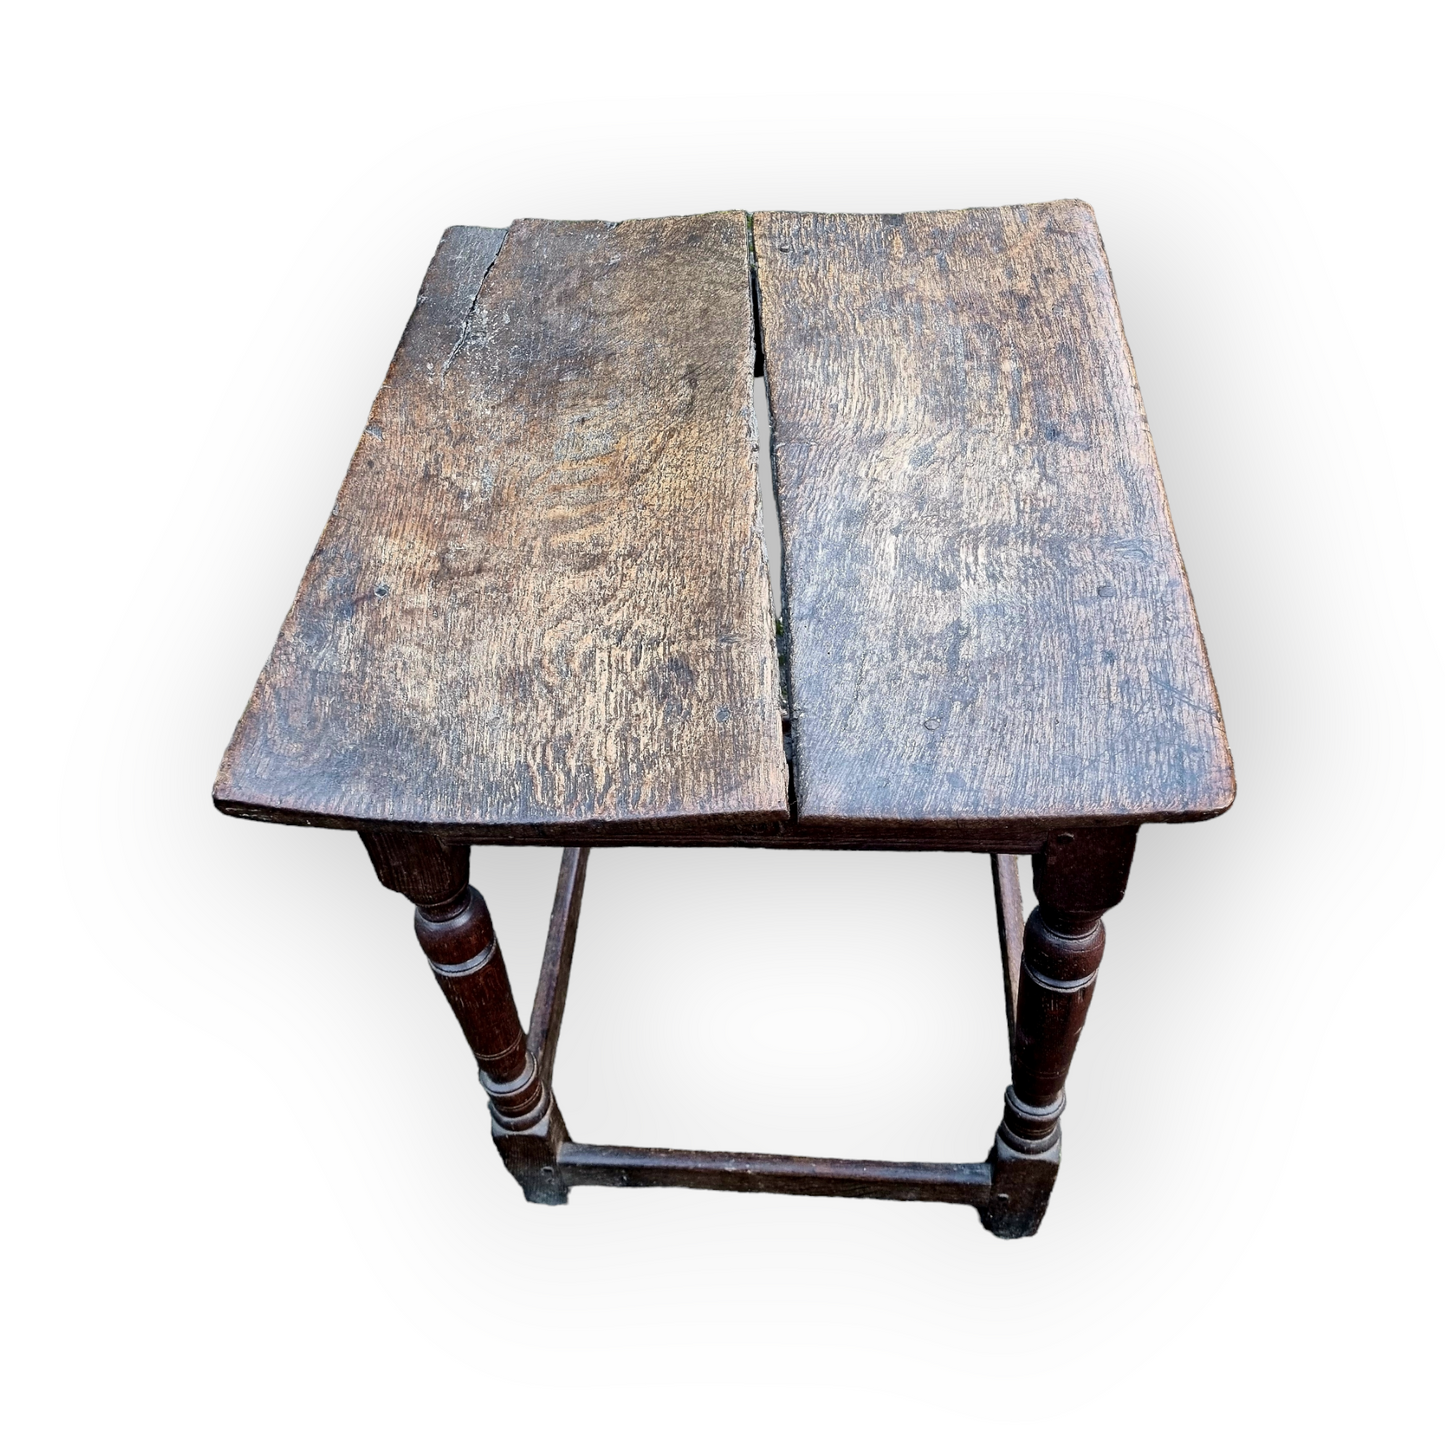 Late 16th Century English Antique Oak Tavern Table in Original Condition